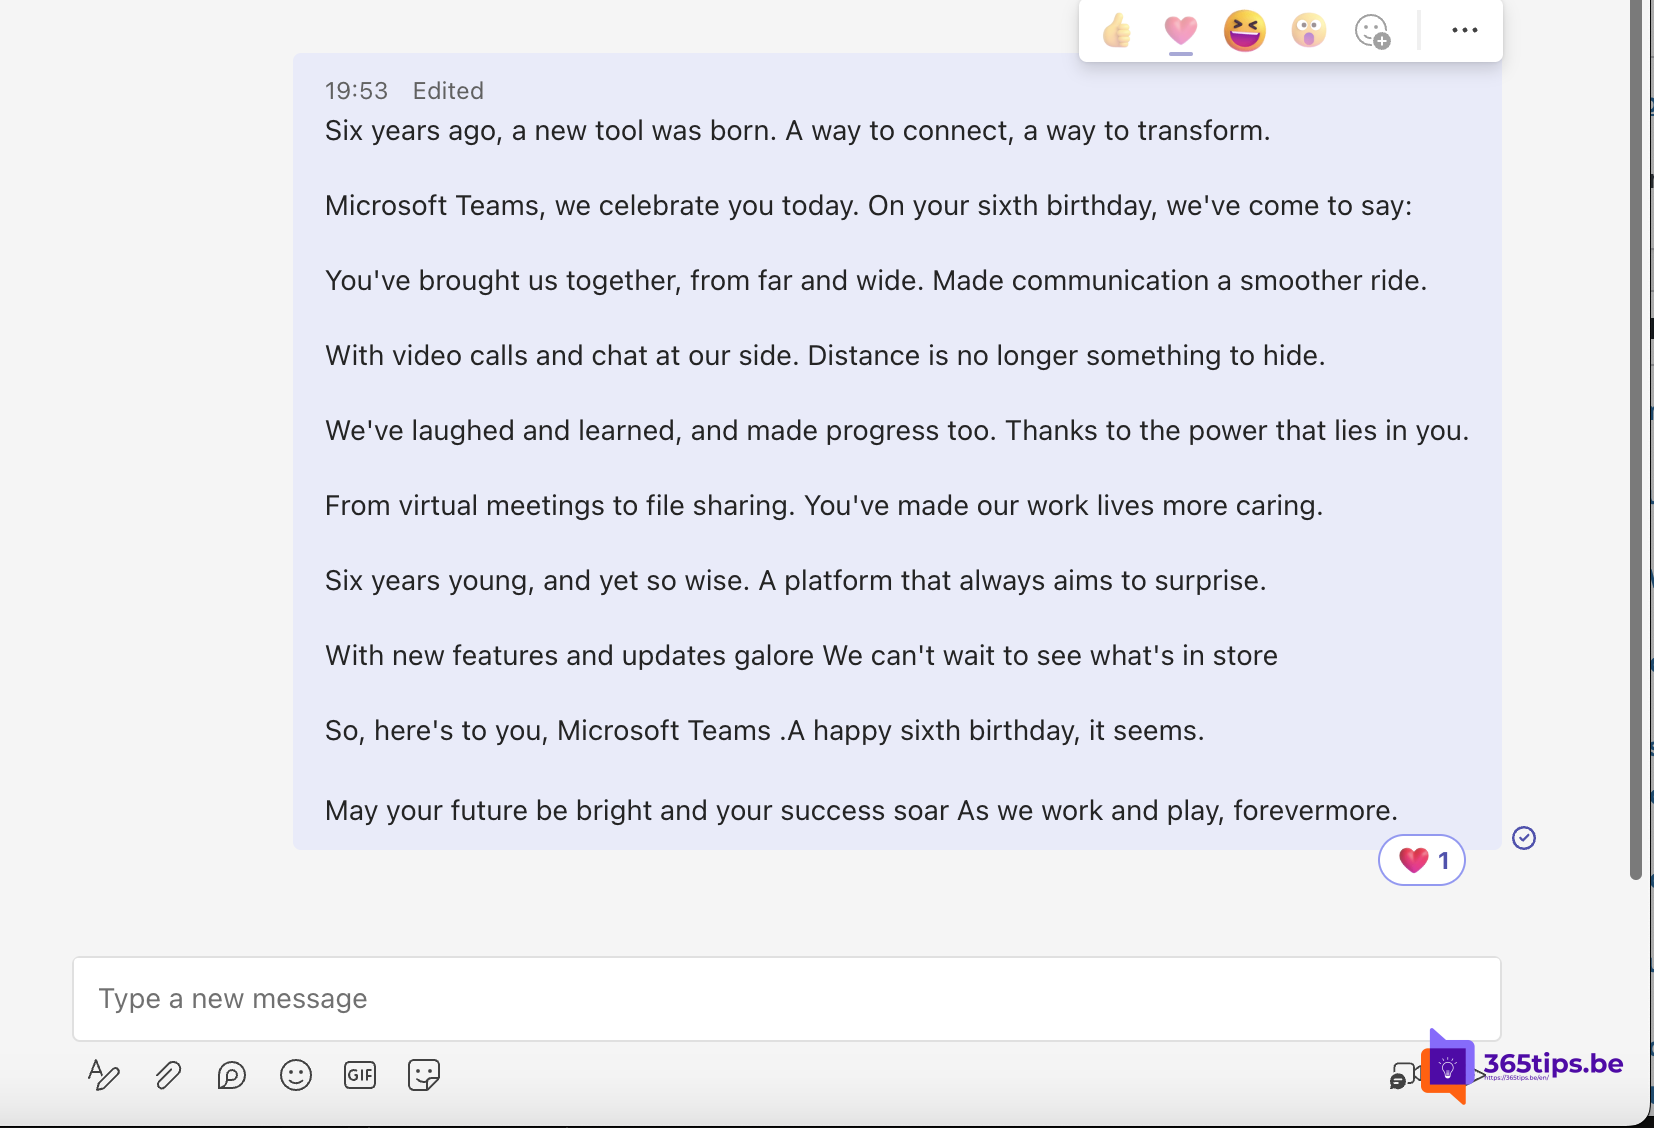 Happy 6th birthday, Microsoft Teams! 🎉 🎈